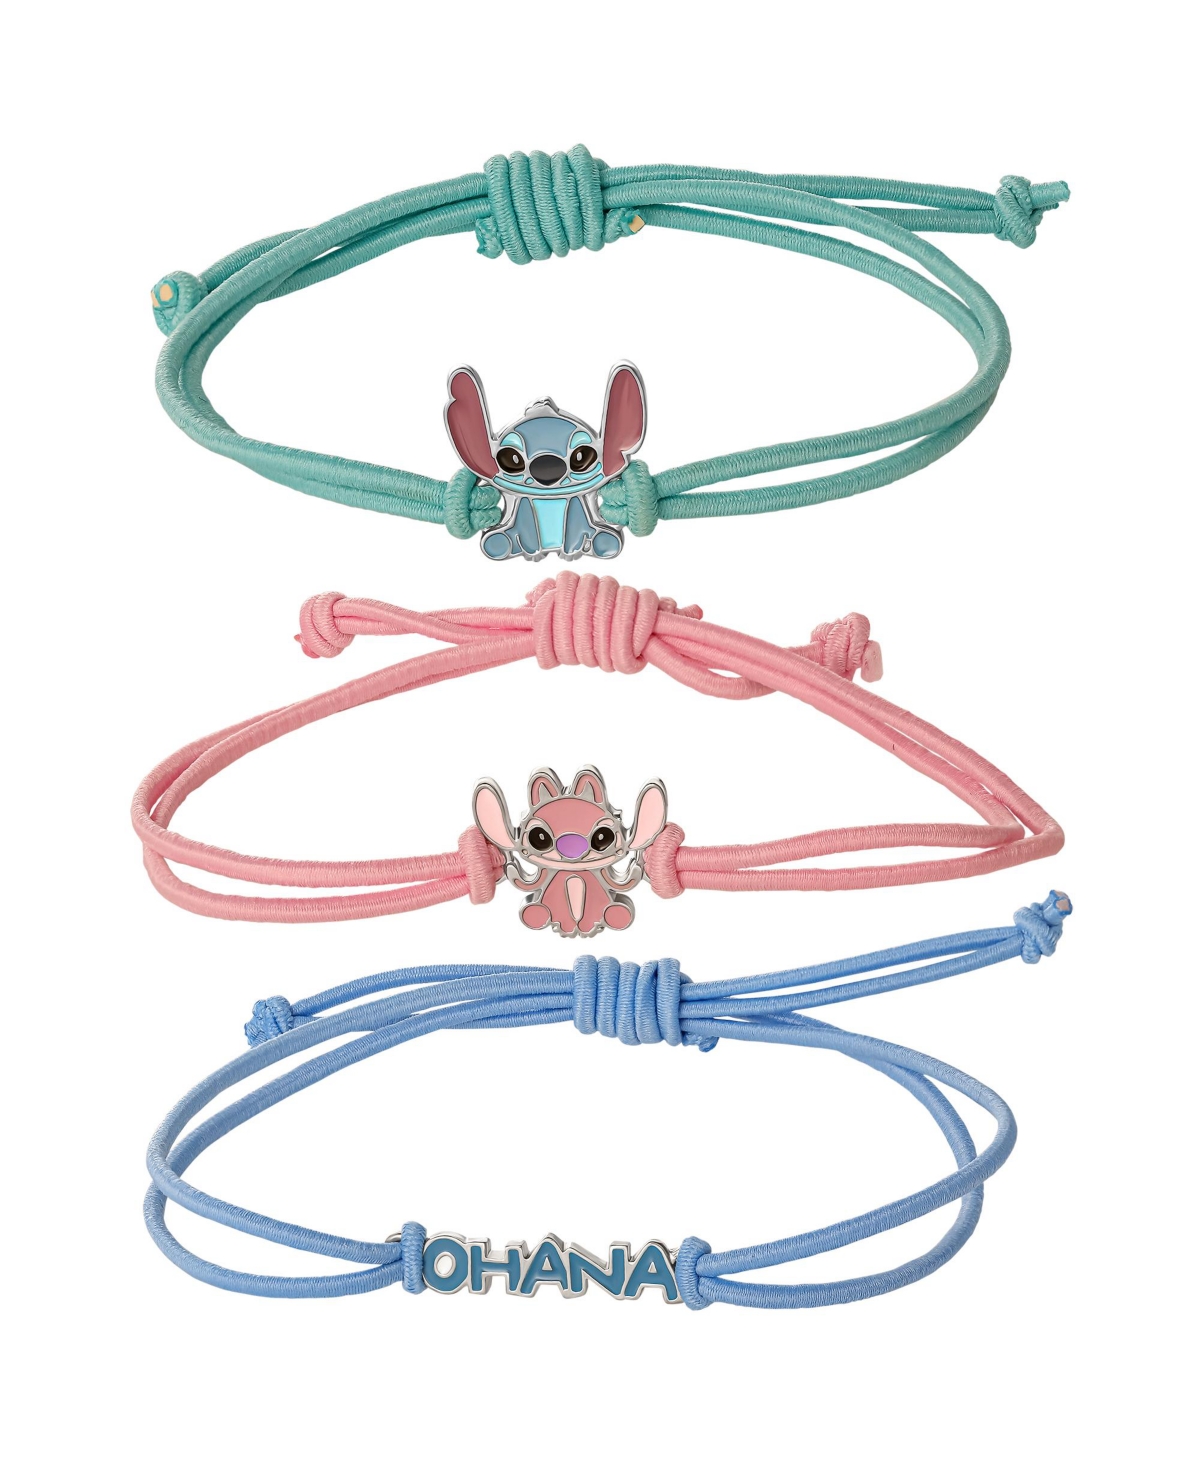 Lilo and Stitch Fashion Stitch Cord Bracelet Set Of 3 - Blue, pink, green